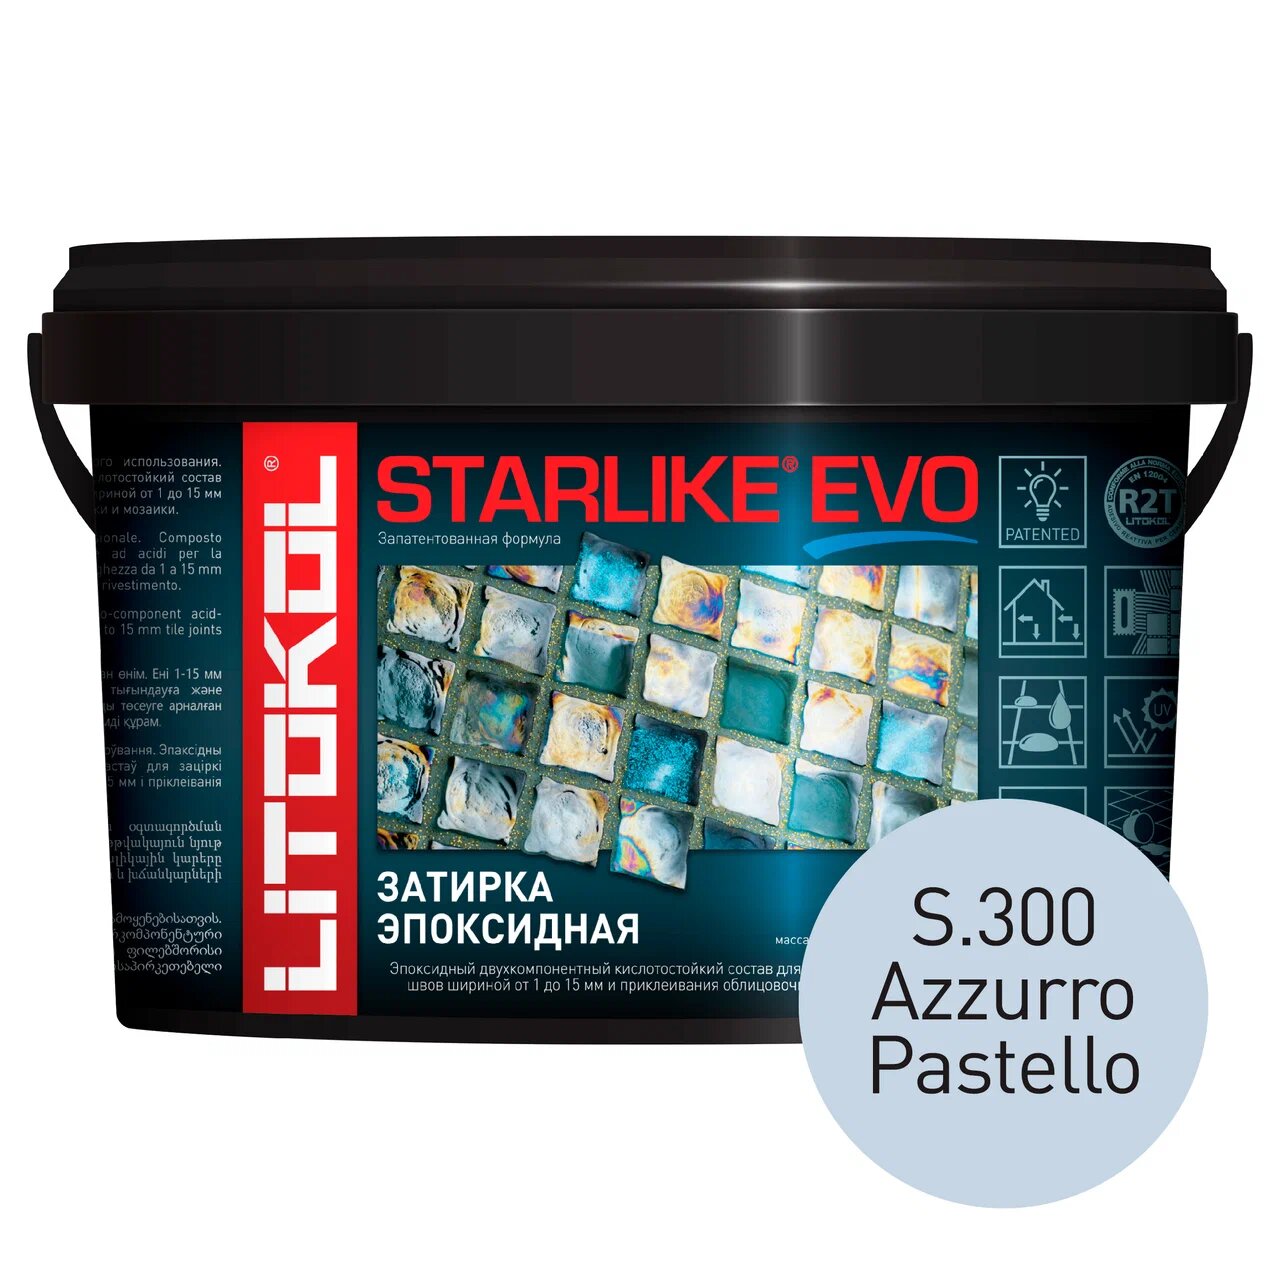 Затирка LITOKOL STARLIKE EVO S.300 AZZURRO PASTELLO, 1 кг затирка litokol starlike defender evo s 300 azzurro pastello 1 кг